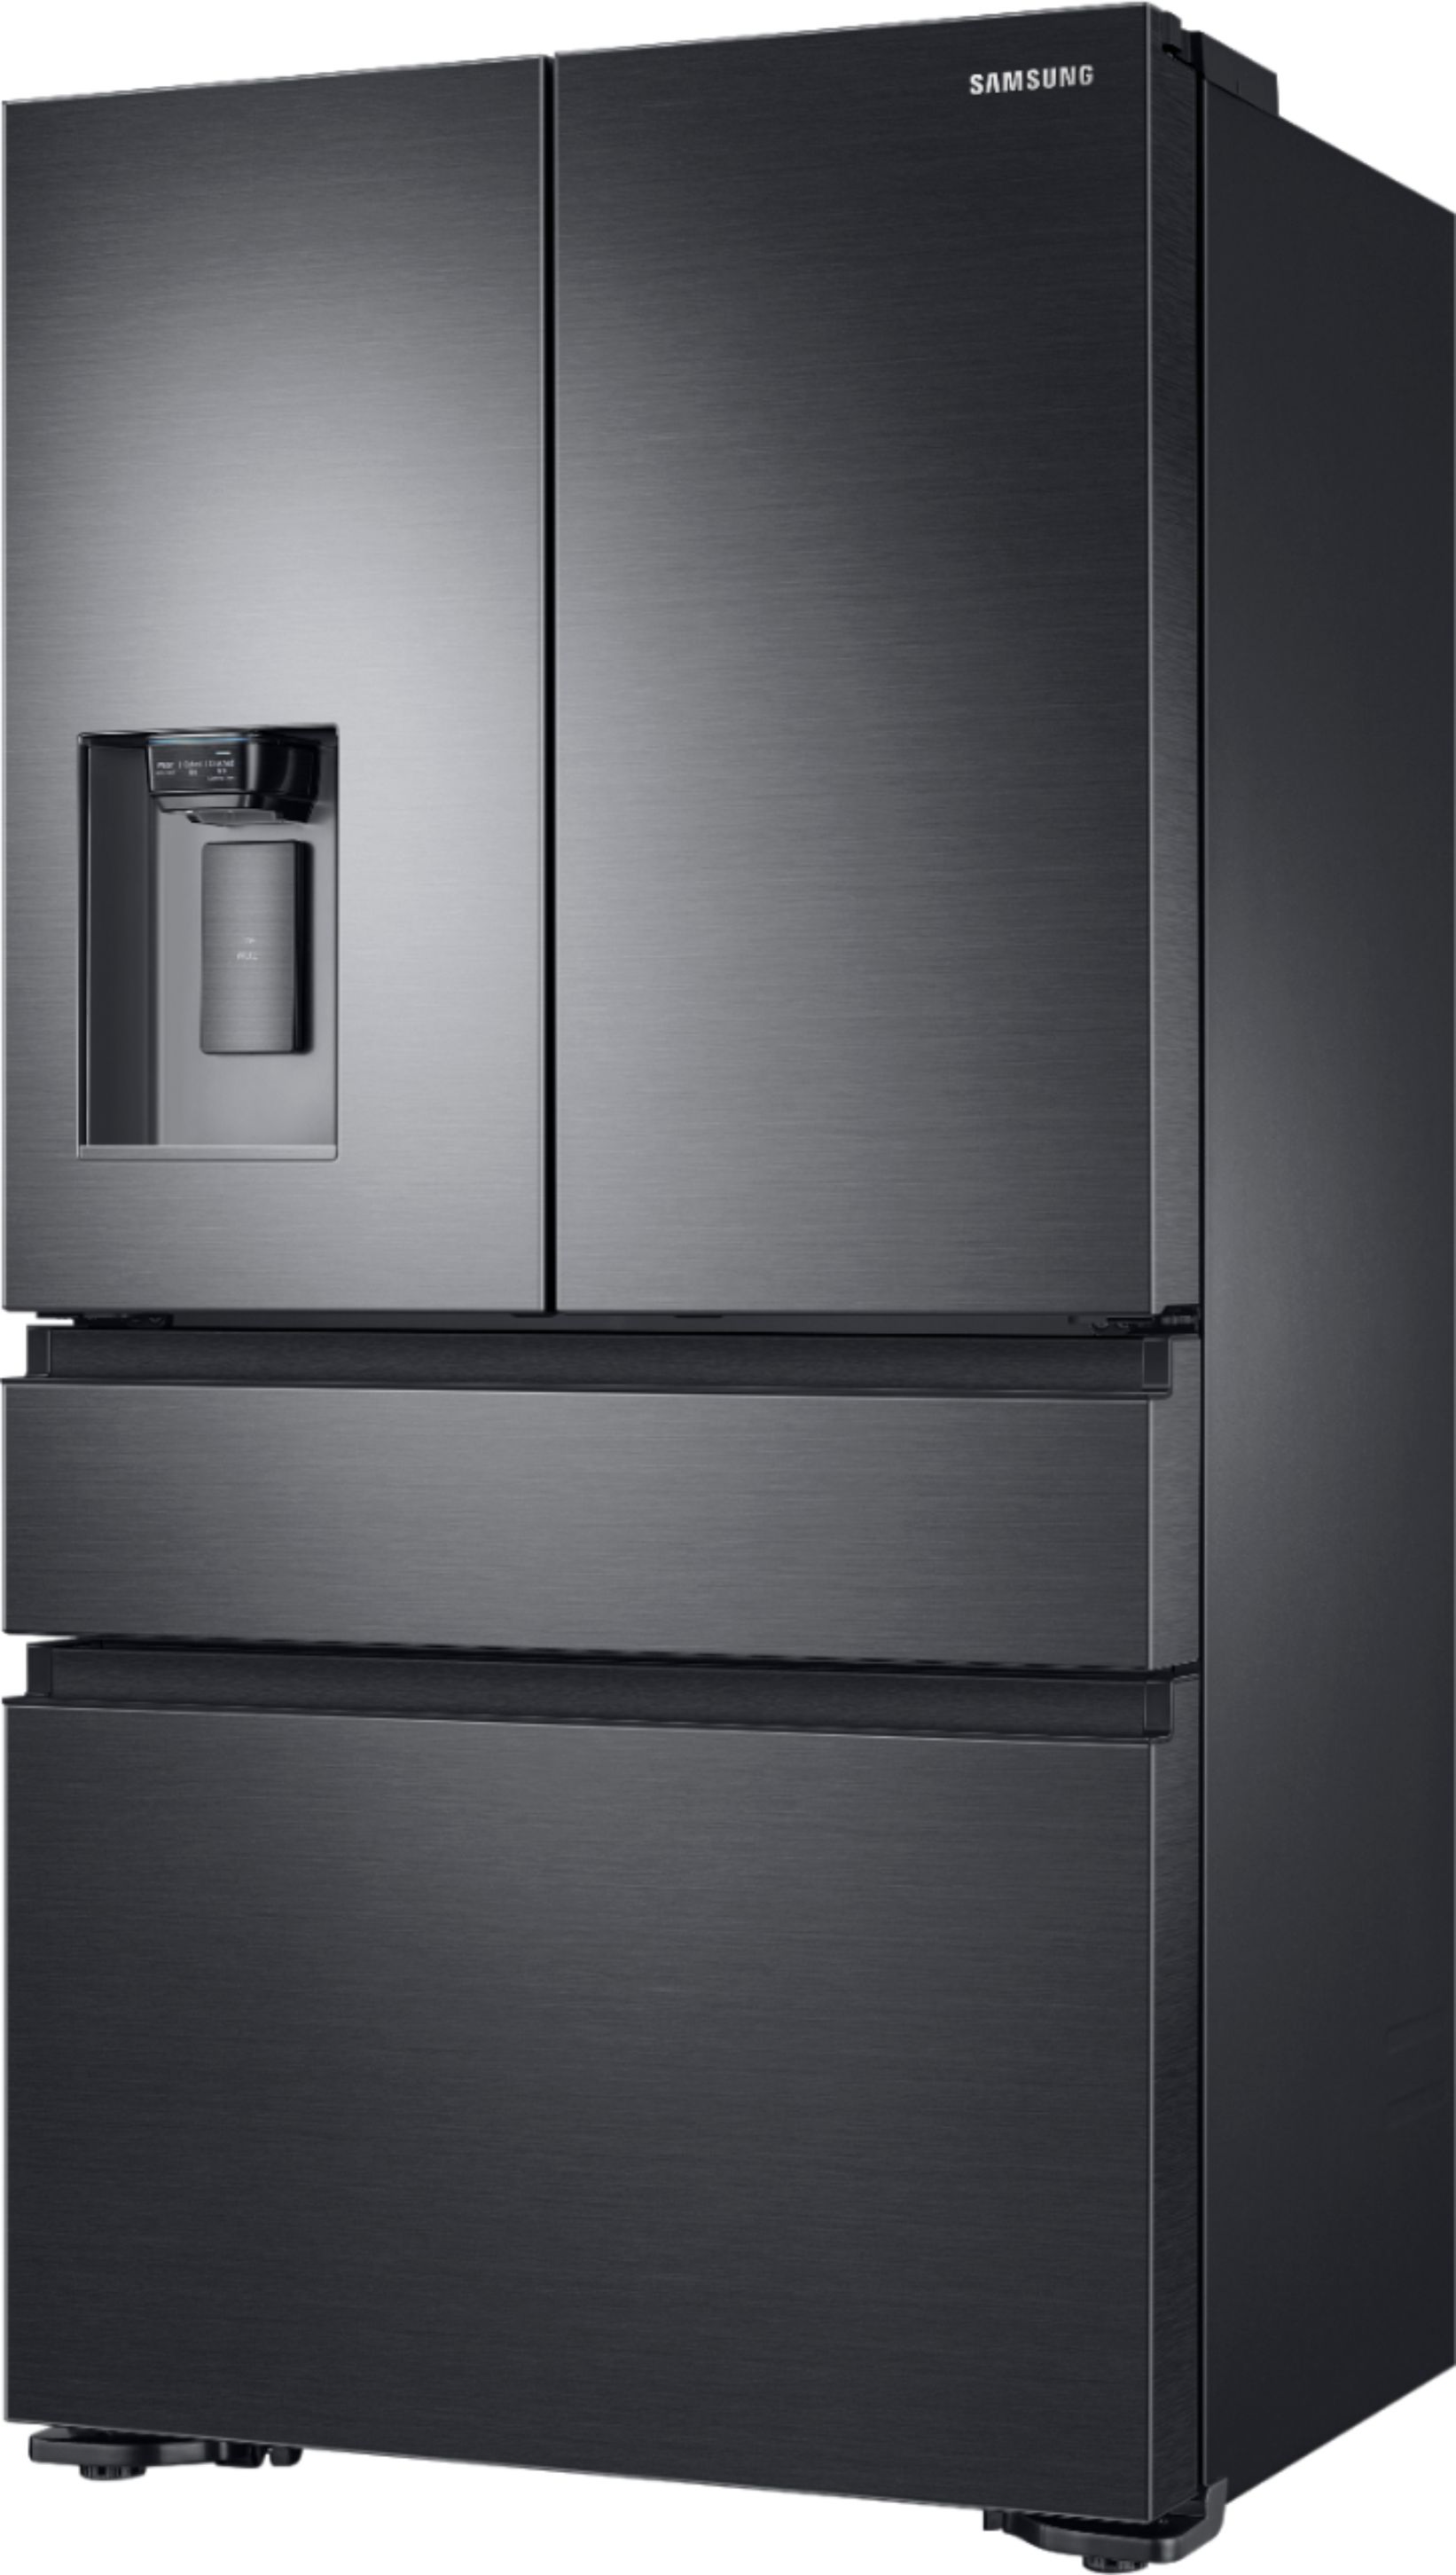 Left View: Samsung - 22.6 cu. ft. 4-Door Flex French Door Counter Depth Refrigerator with FlexZone Drawer - Black Stainless Steel